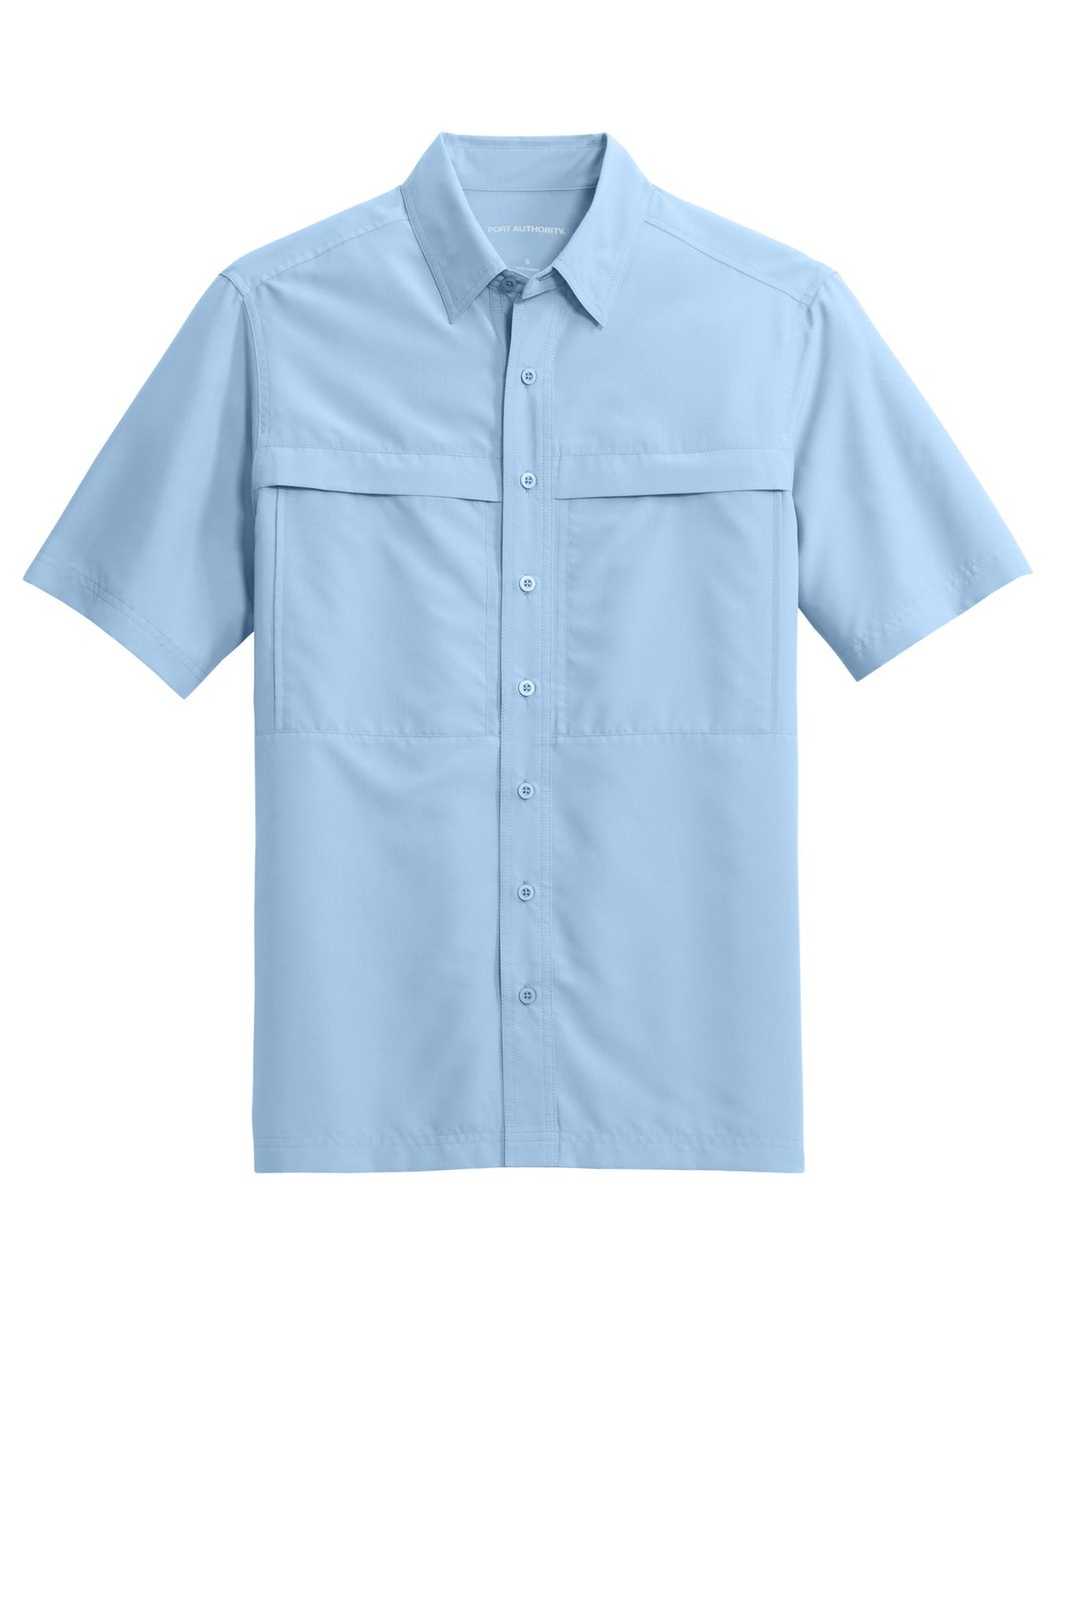 Port Authority W961 Short Sleeve UV Daybreak Shirt - Light Blue - HIT a Double - 1